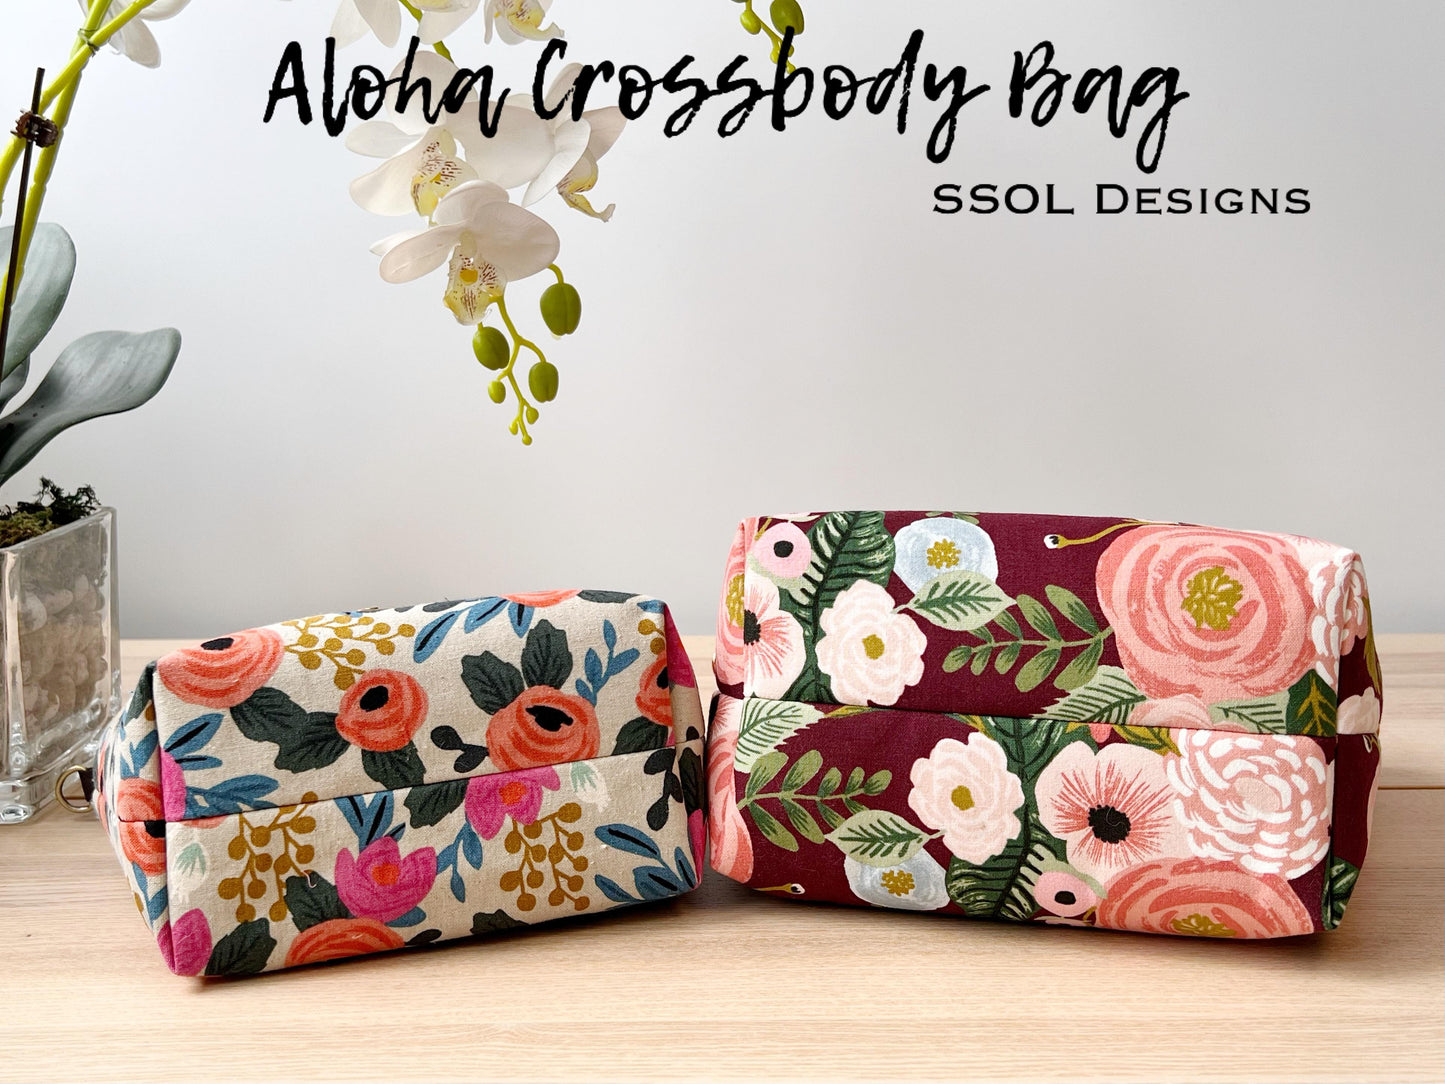 Aloha Crossbody Bag Pattern